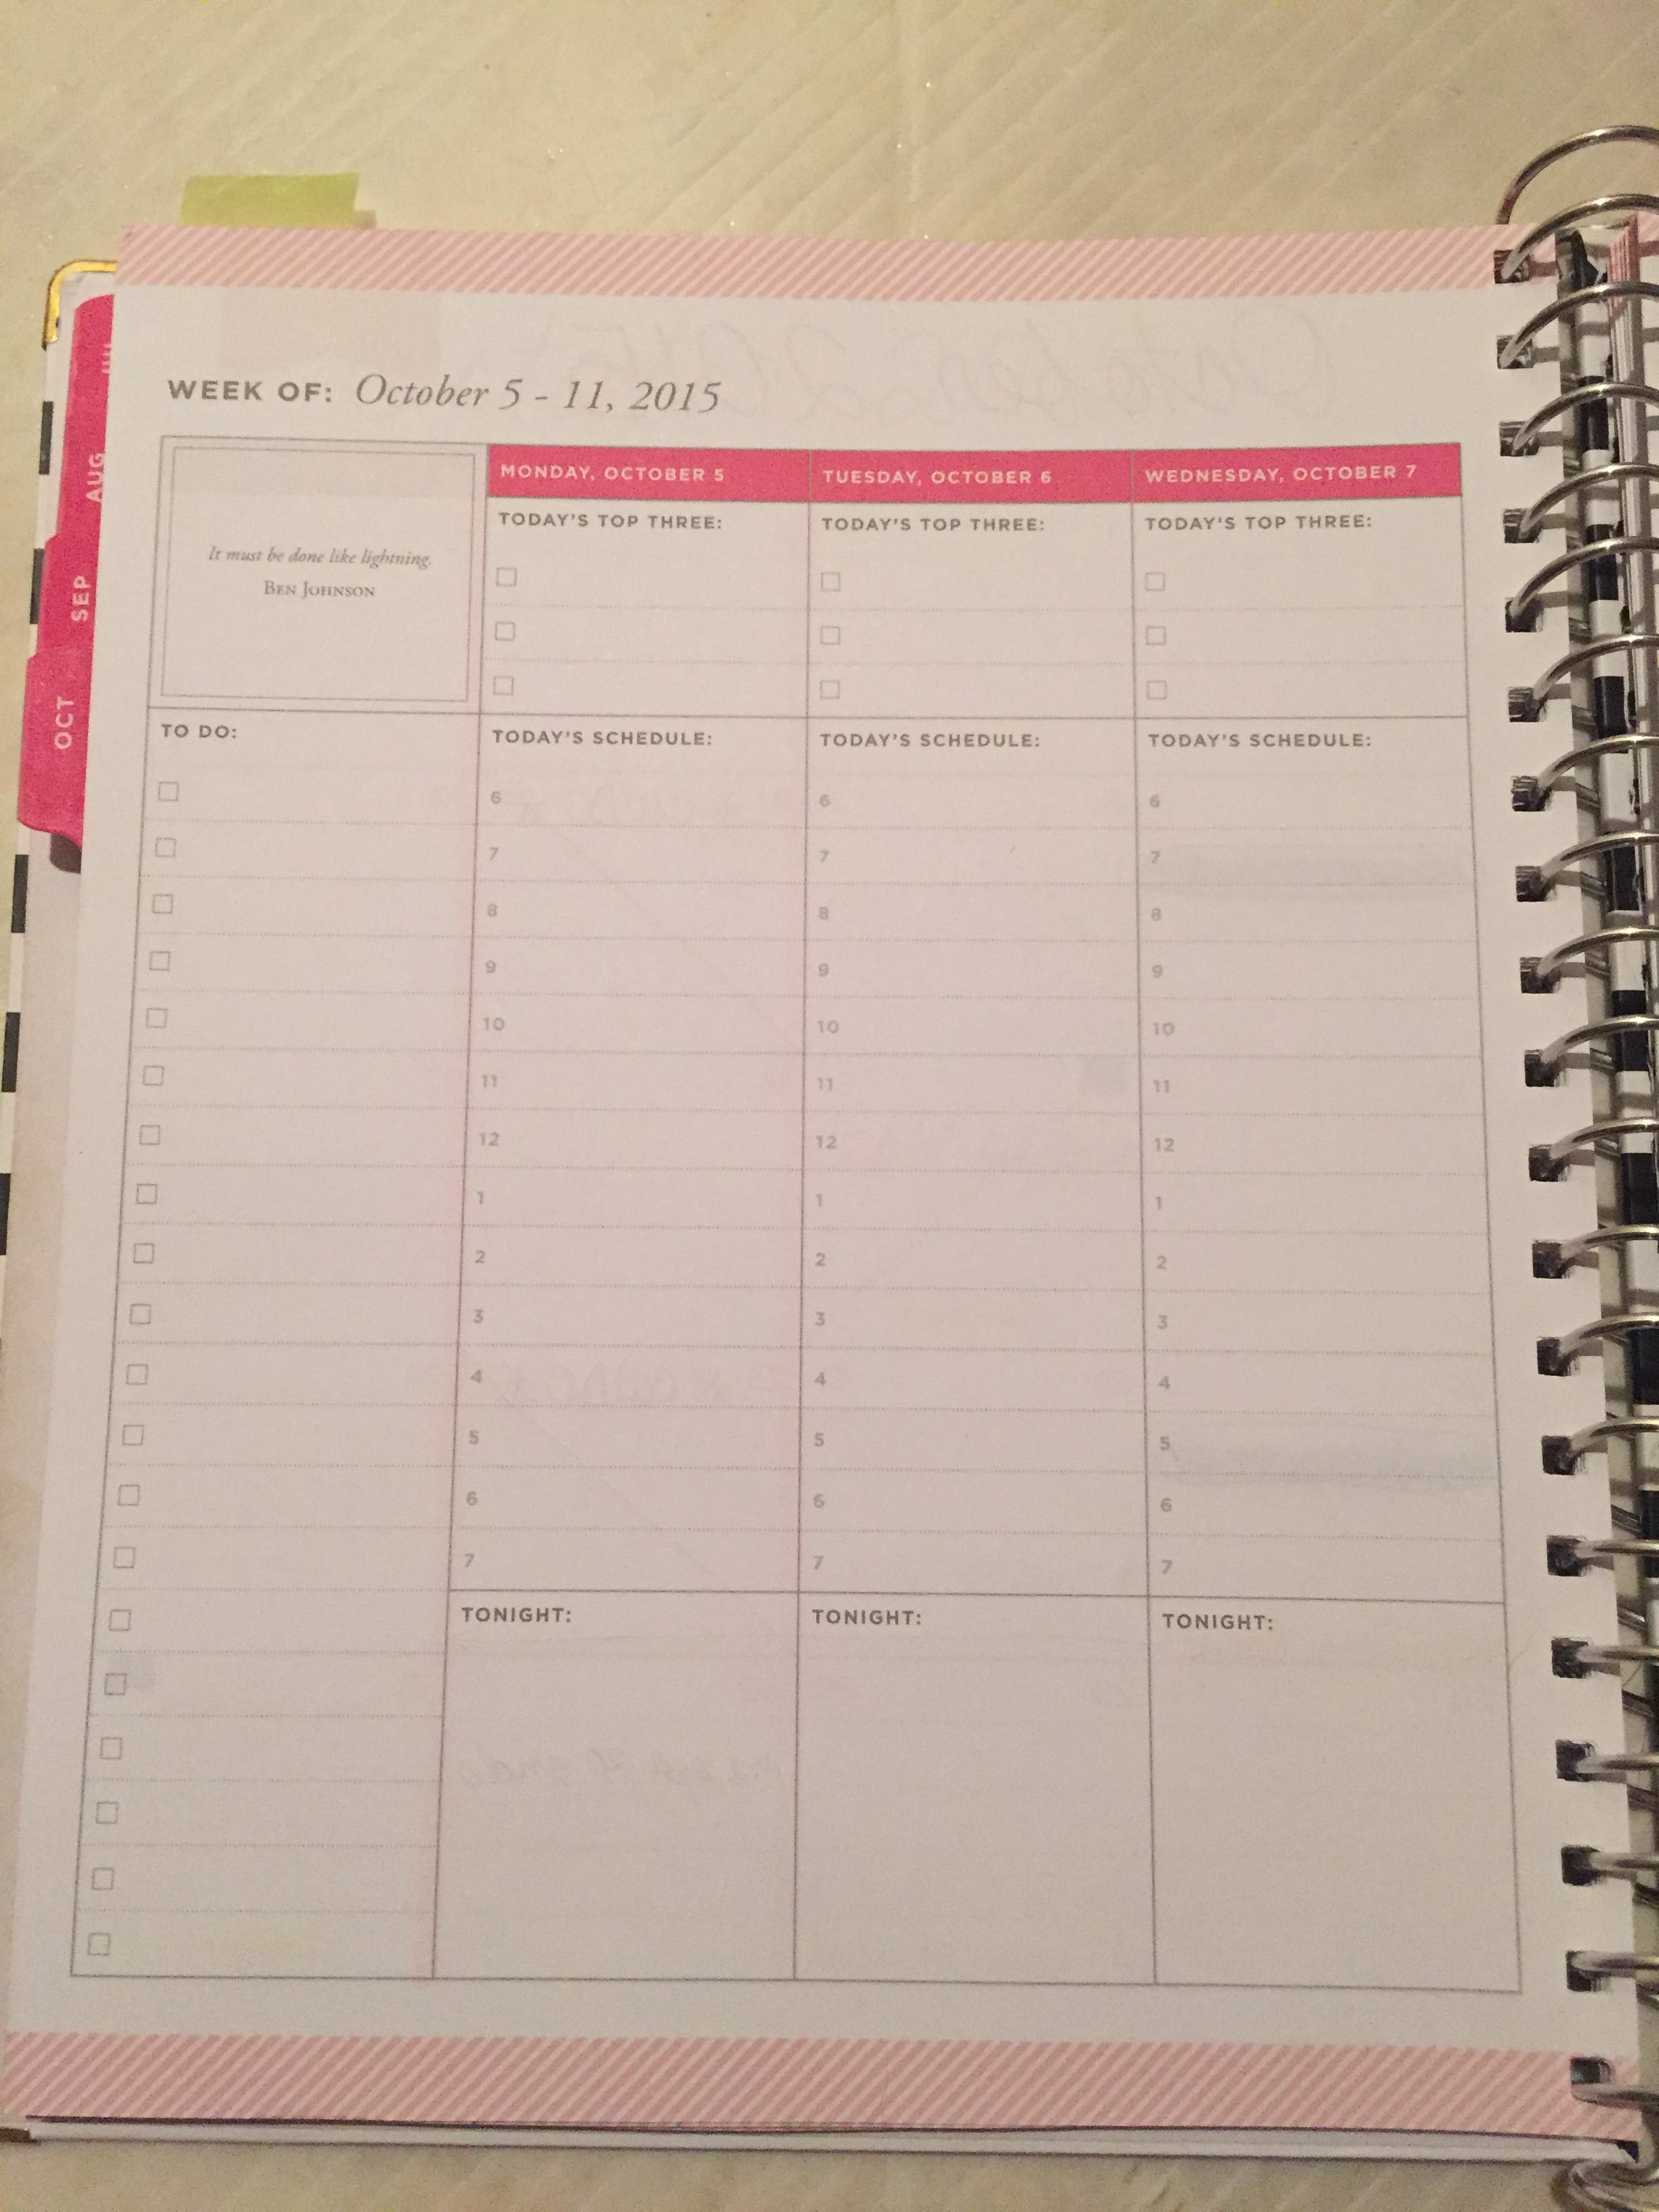 Day Designer, planner, schedule, task list, notes section, 